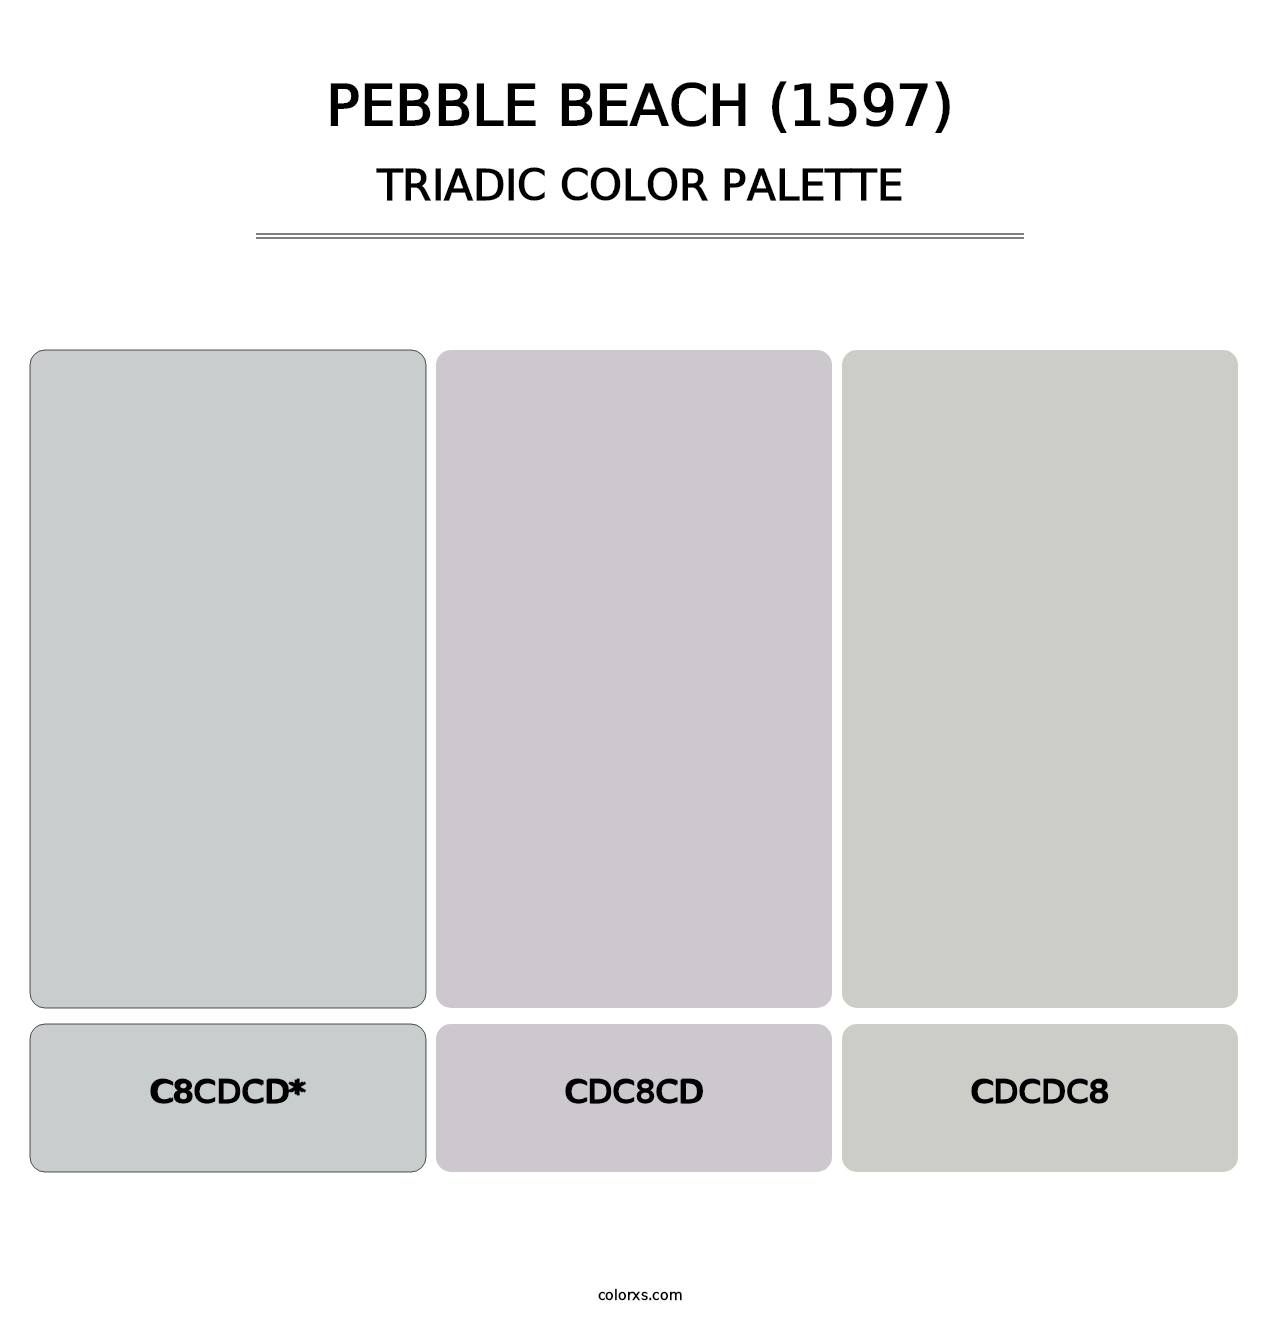 Pebble Beach (1597) - Triadic Color Palette